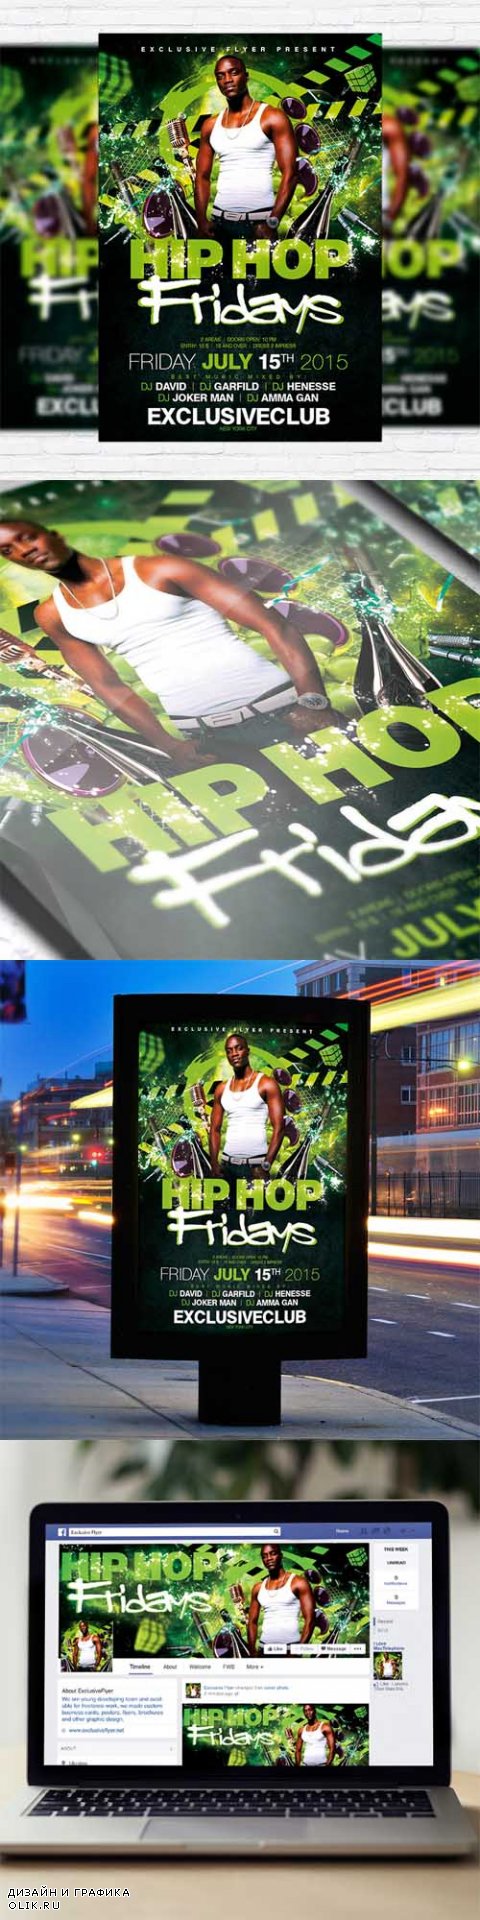 Flyer Template - Hip Hop Fridays + Facebook Cover